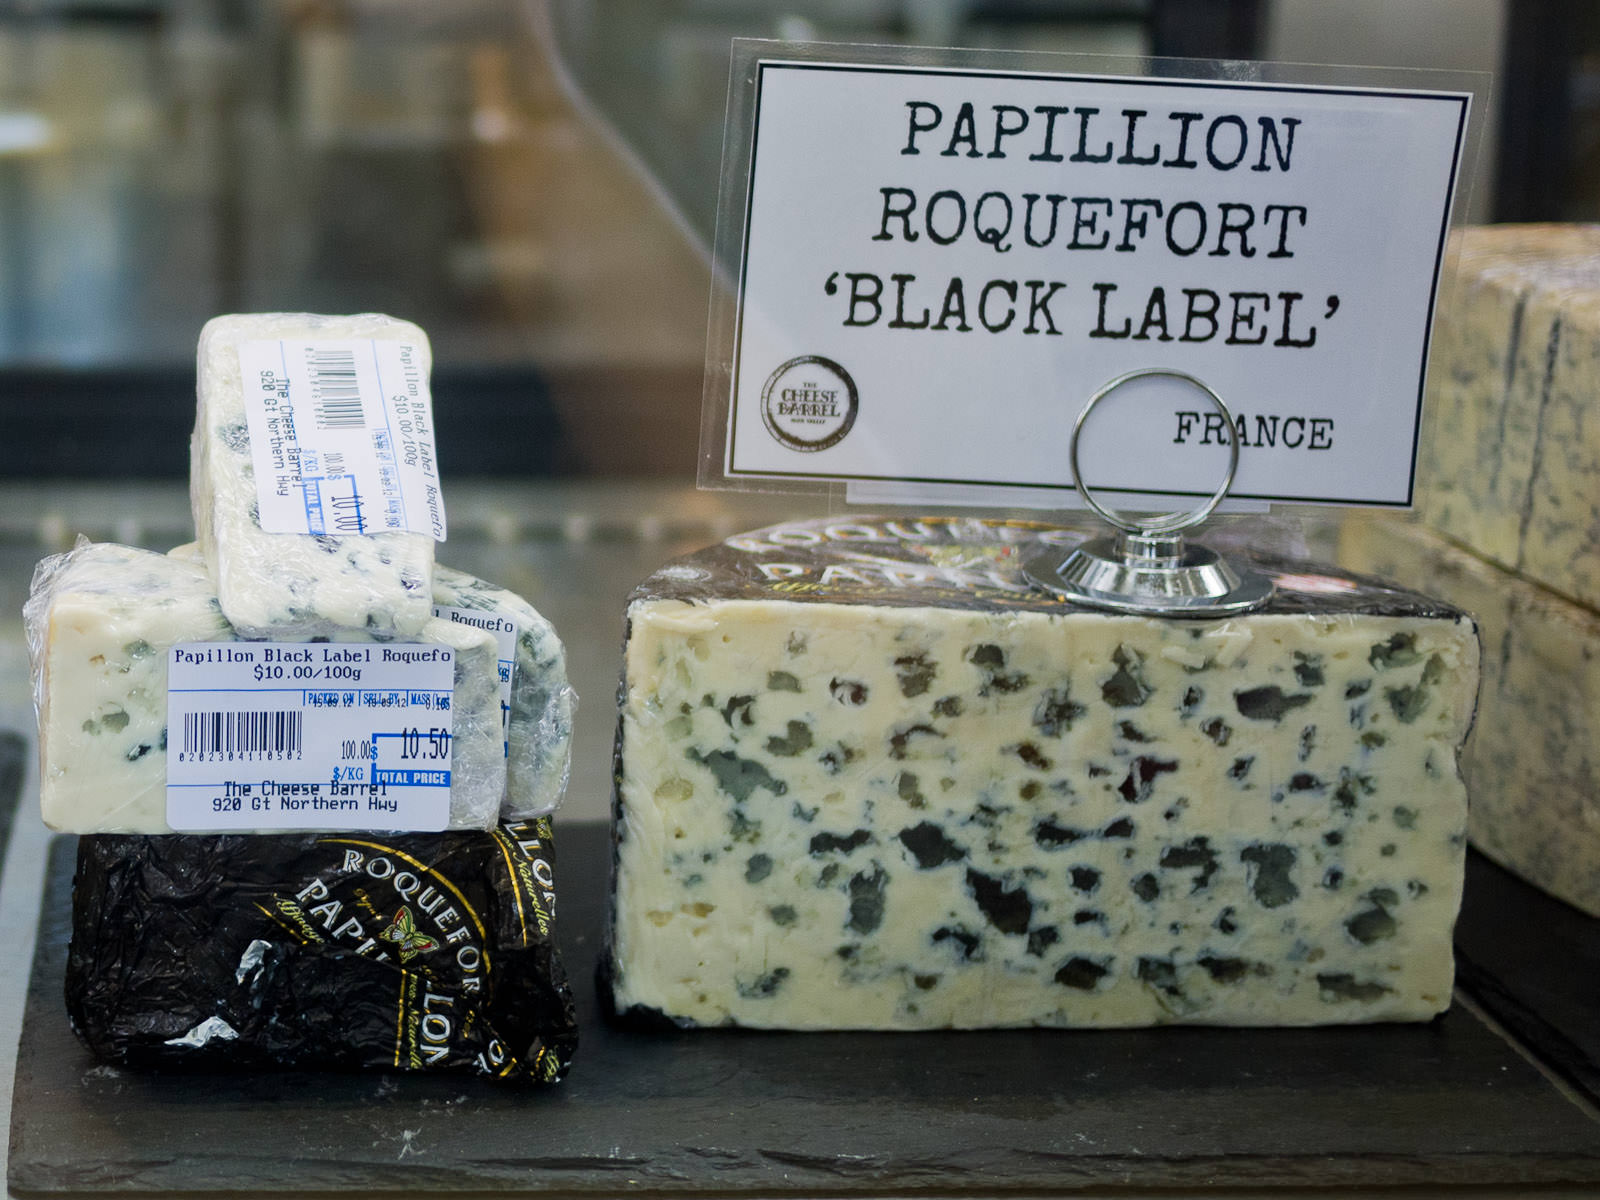 Papillion 'Black Label' Roquefort, blue mould ewe's milk cheese (France)